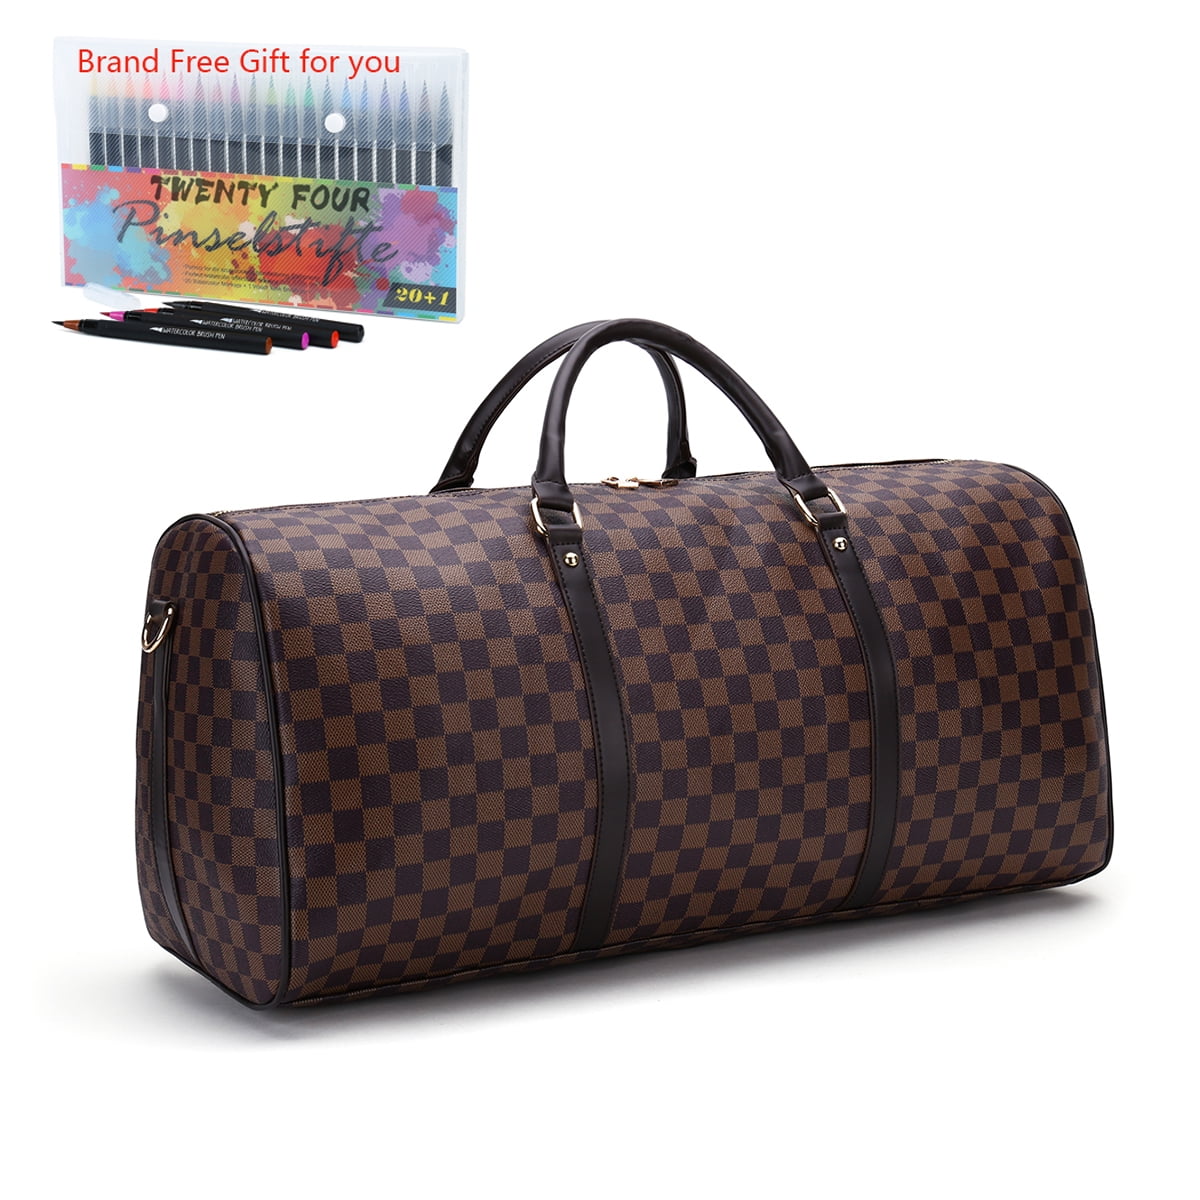 TWENTY FOUR 21 Checkered Bag Travel Duffel Bag Weekend Overnight Luggage  Shoulder Bag For Men Women -Brown Checkered 